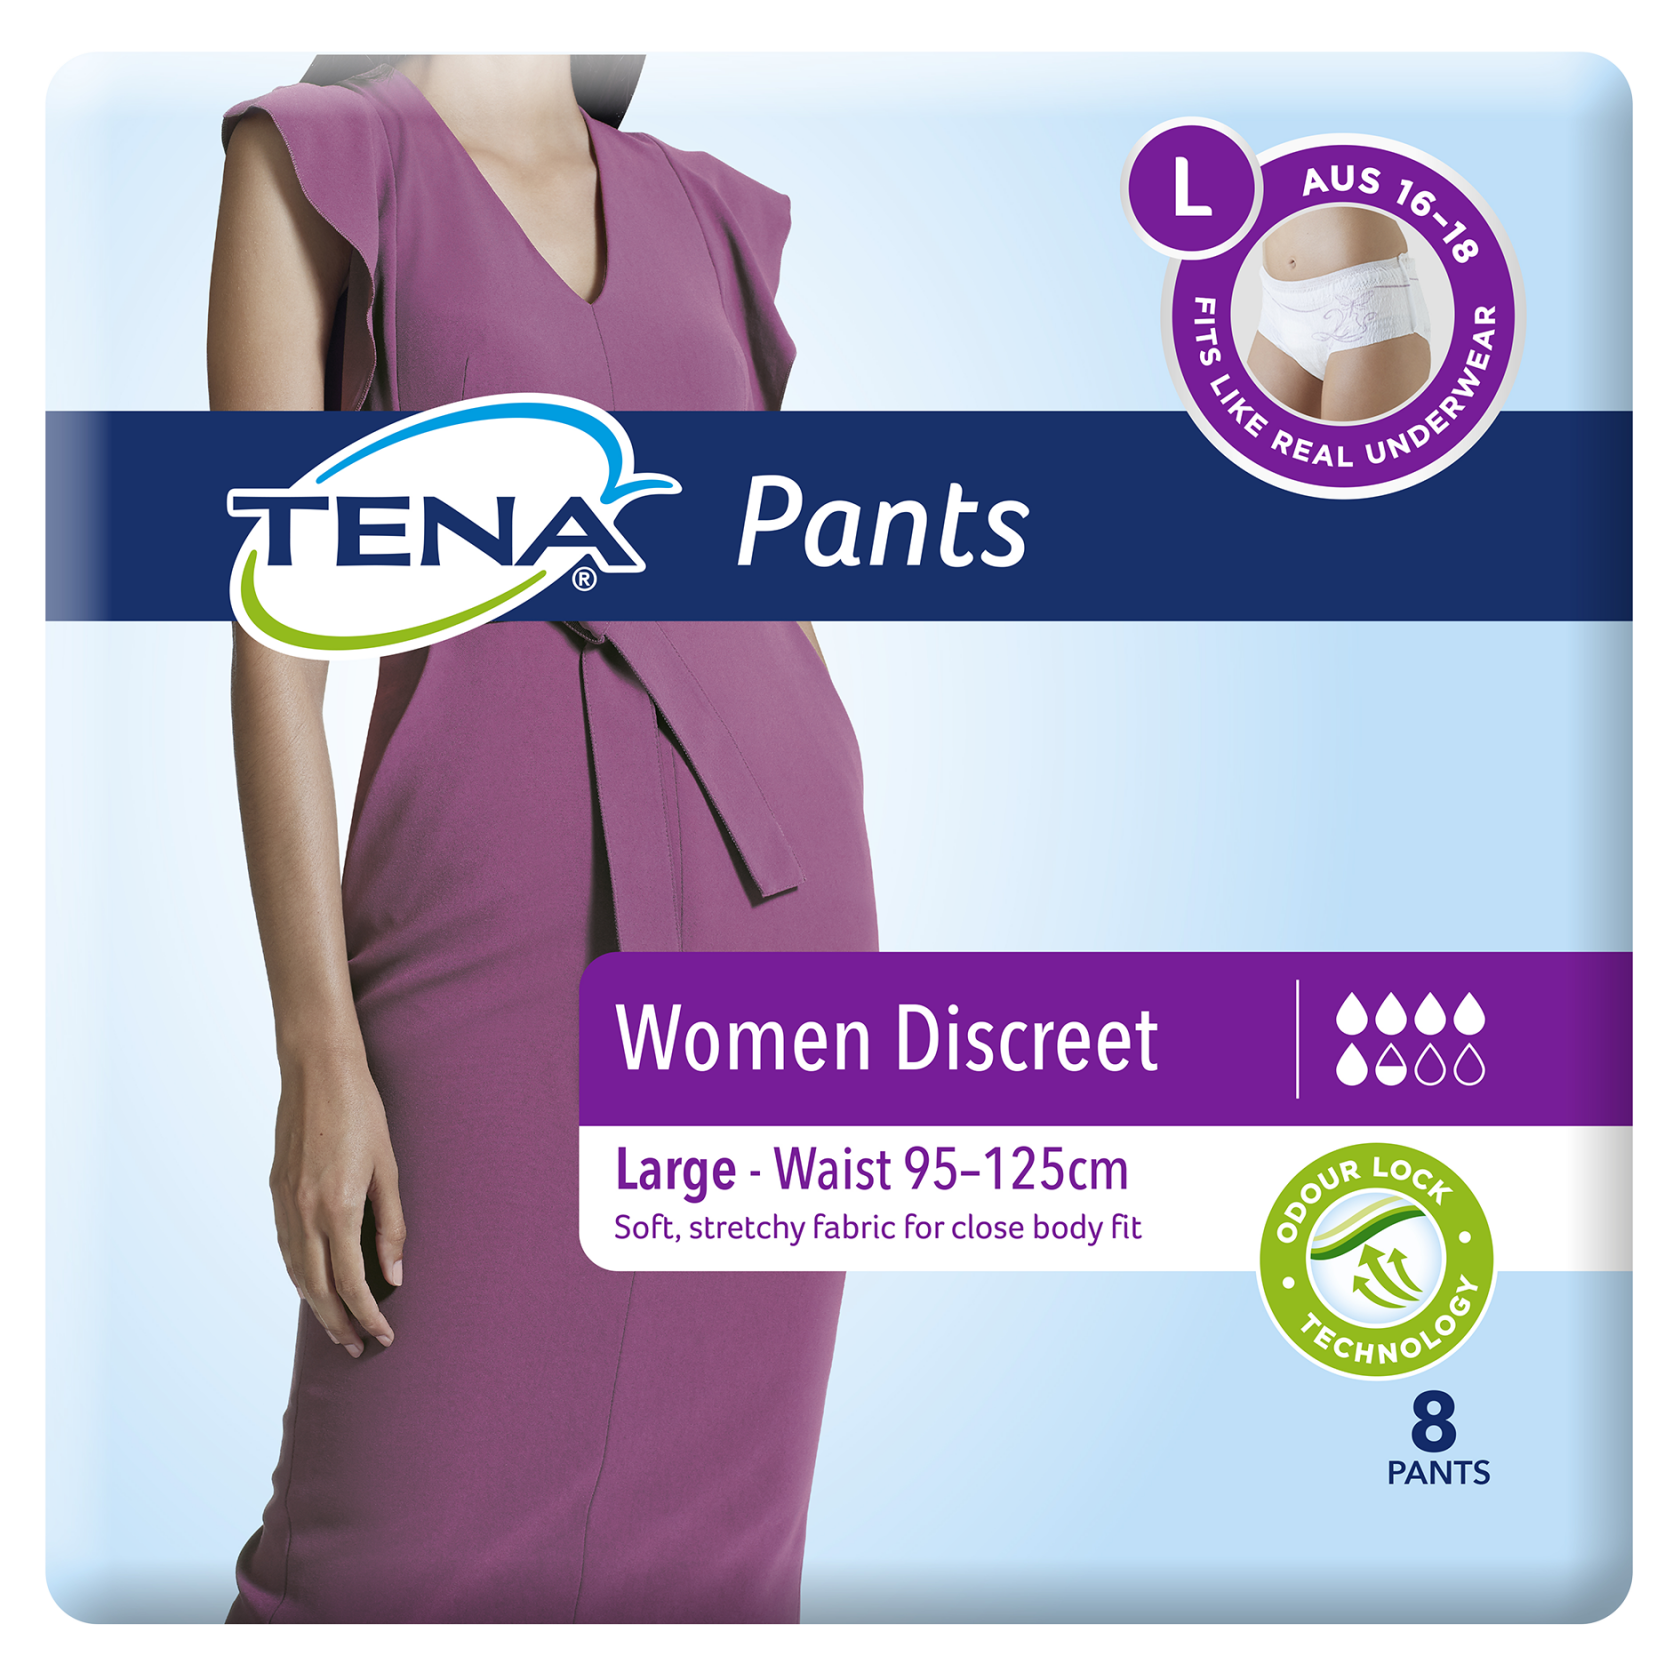 TENA Pants Women Discreet Large image 0